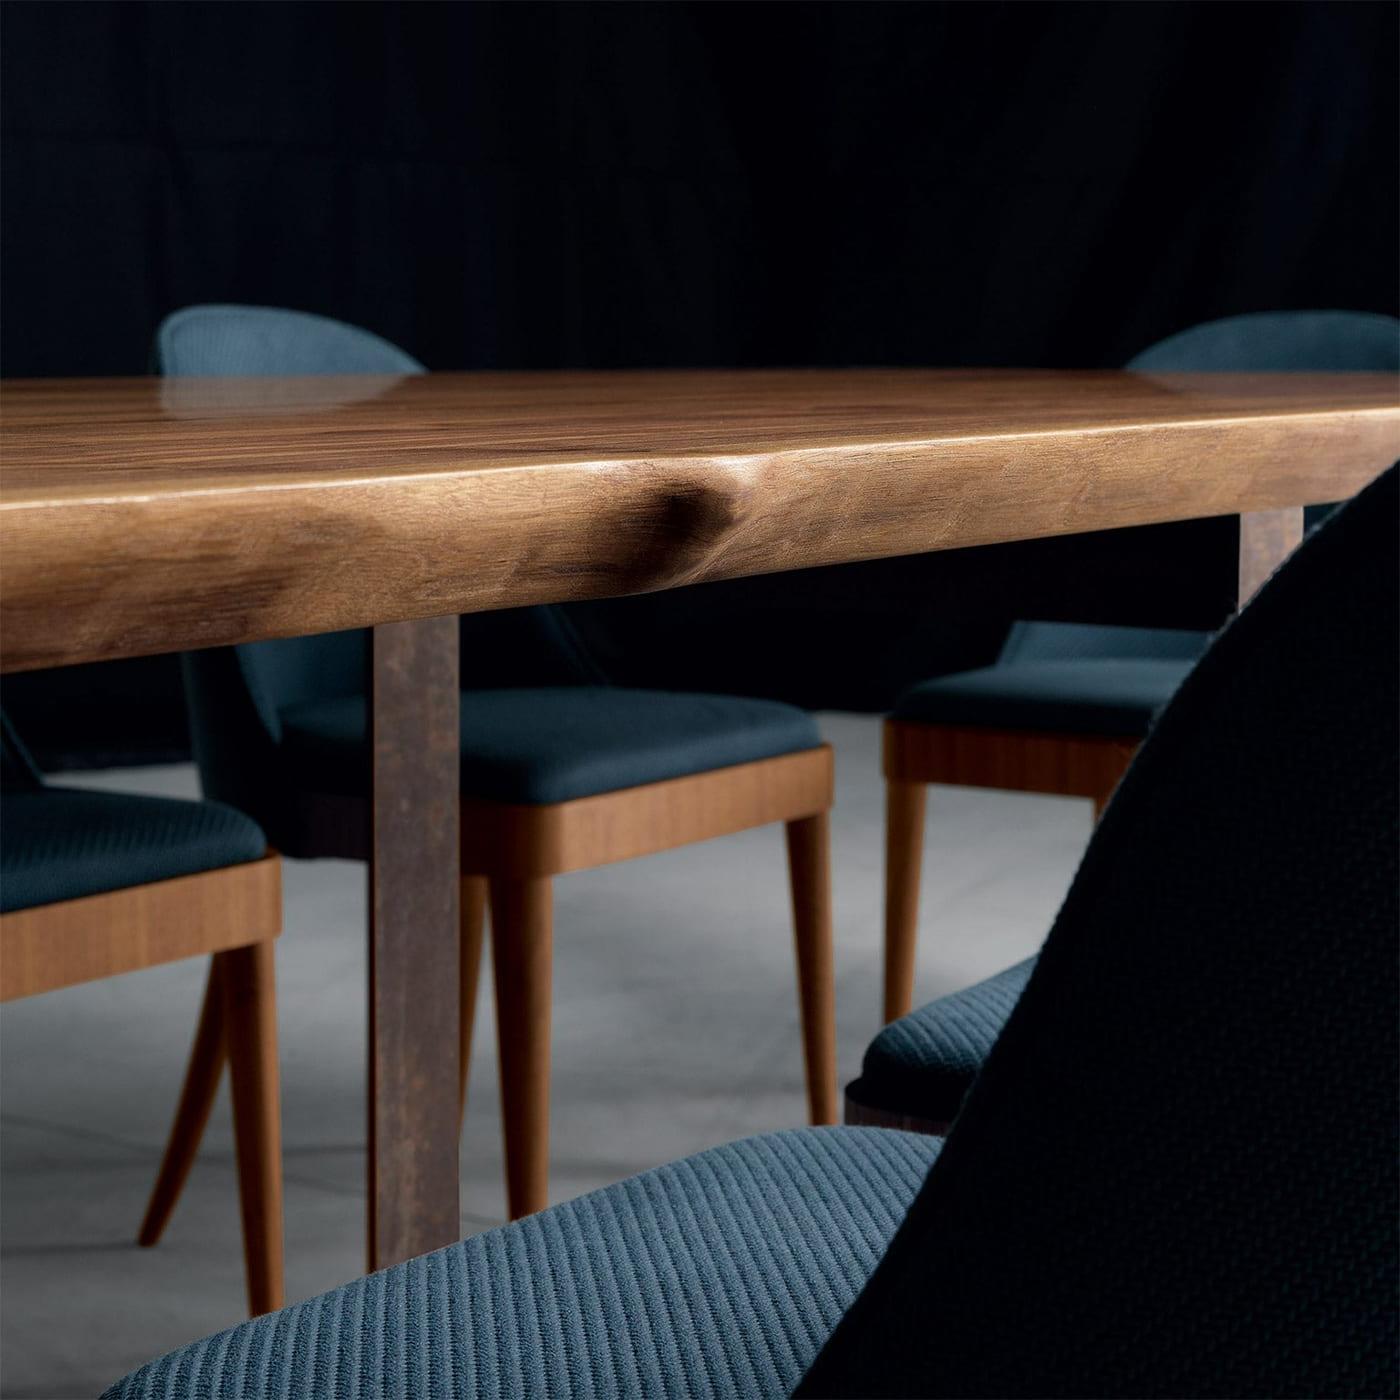 Misura Luxury Dining Table ☞ Dimensions: Length 200 cm